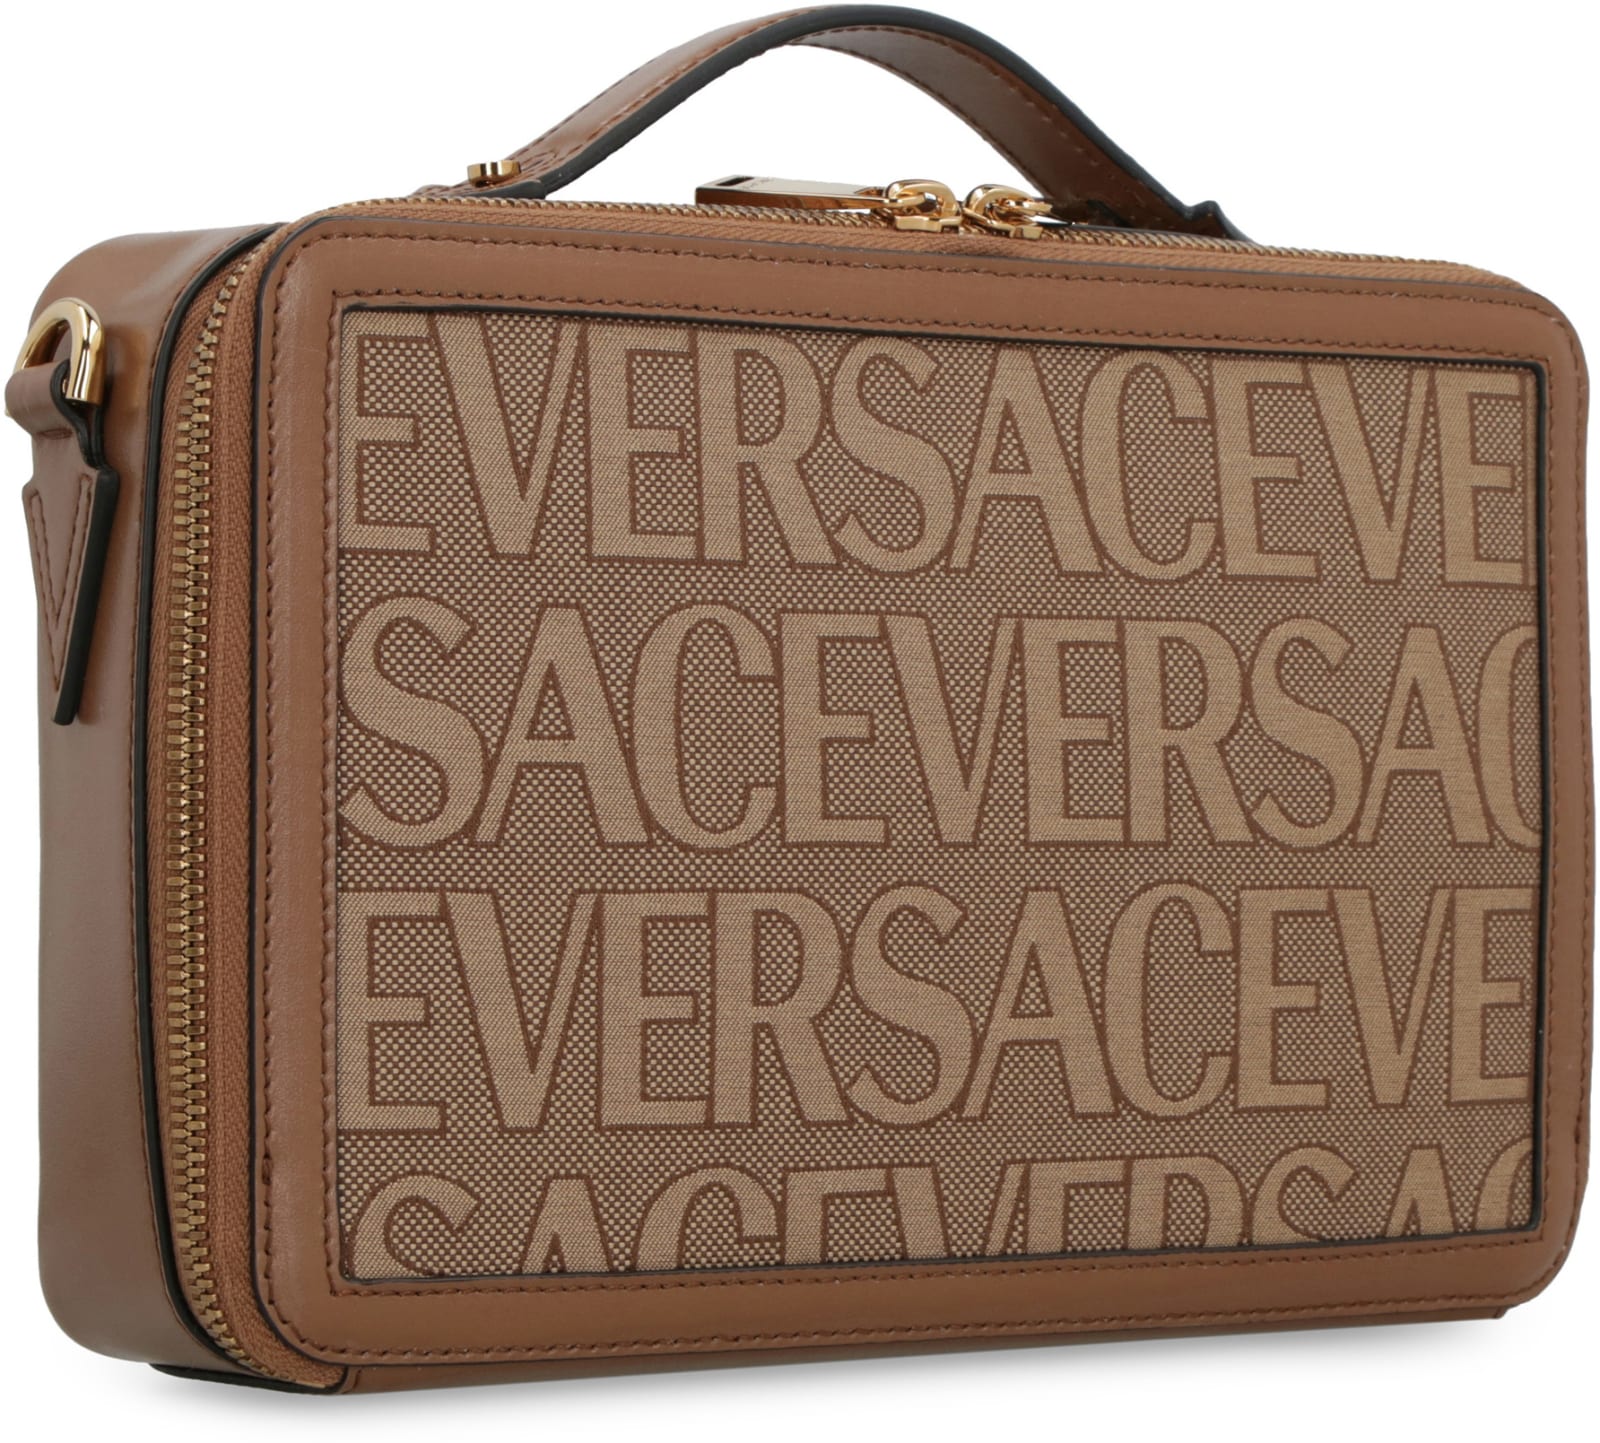 Shop Versace Canvas Messenger Bag In Beimarorover